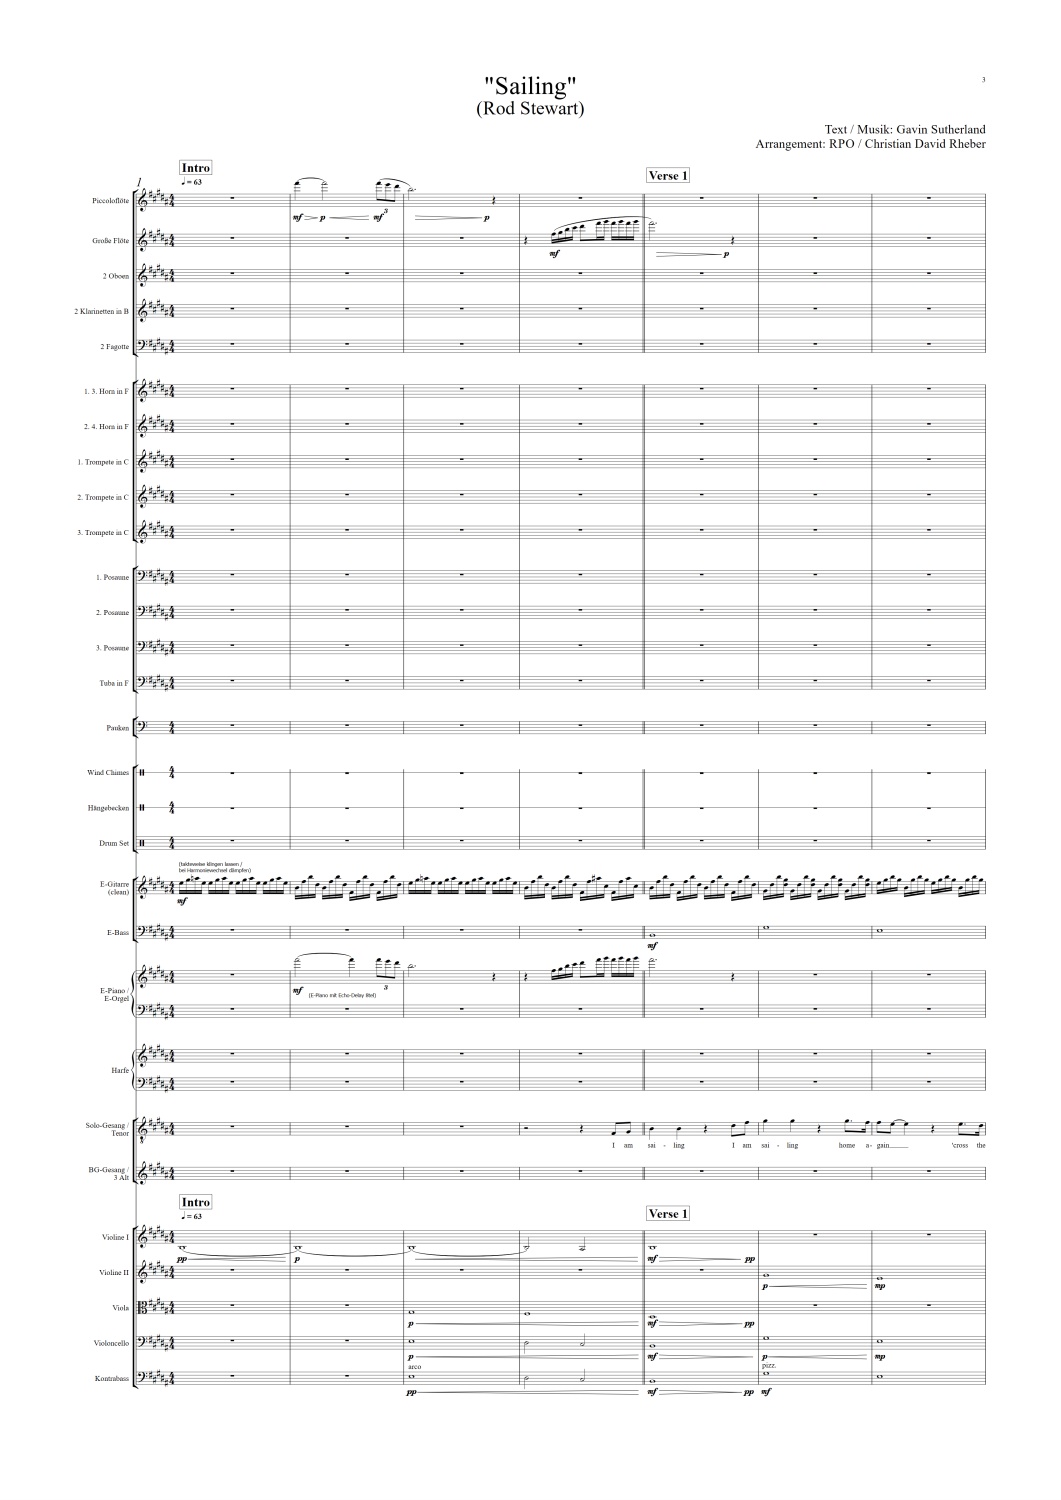 Orchester-Arrangement Sailing (Rod Stewart), Noten für Orchester, Orchester-Partitur, für Orchester arrangiert, Orchester Partitur